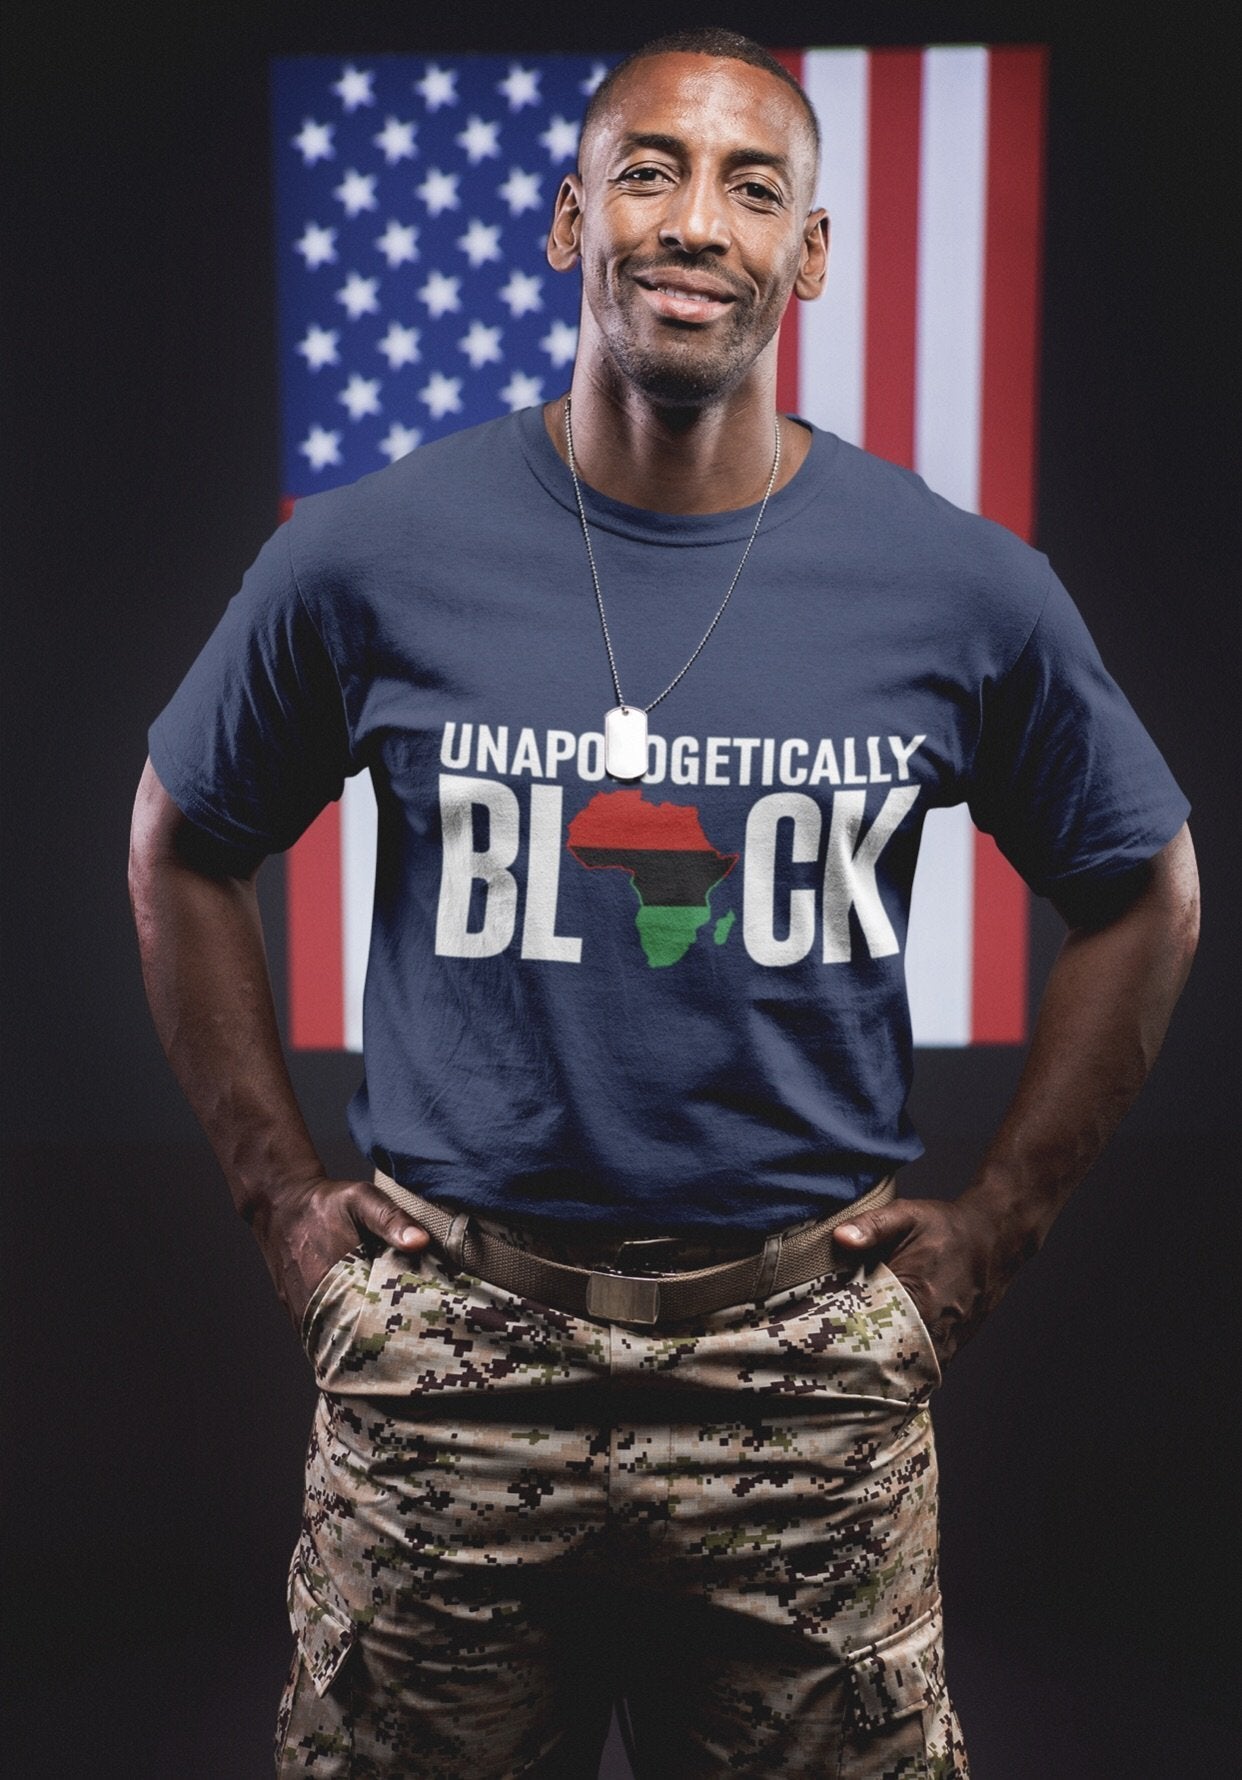 Unapologetically Black RBG Unisex Short sleeve t-shirt - Chocolate Ancestor